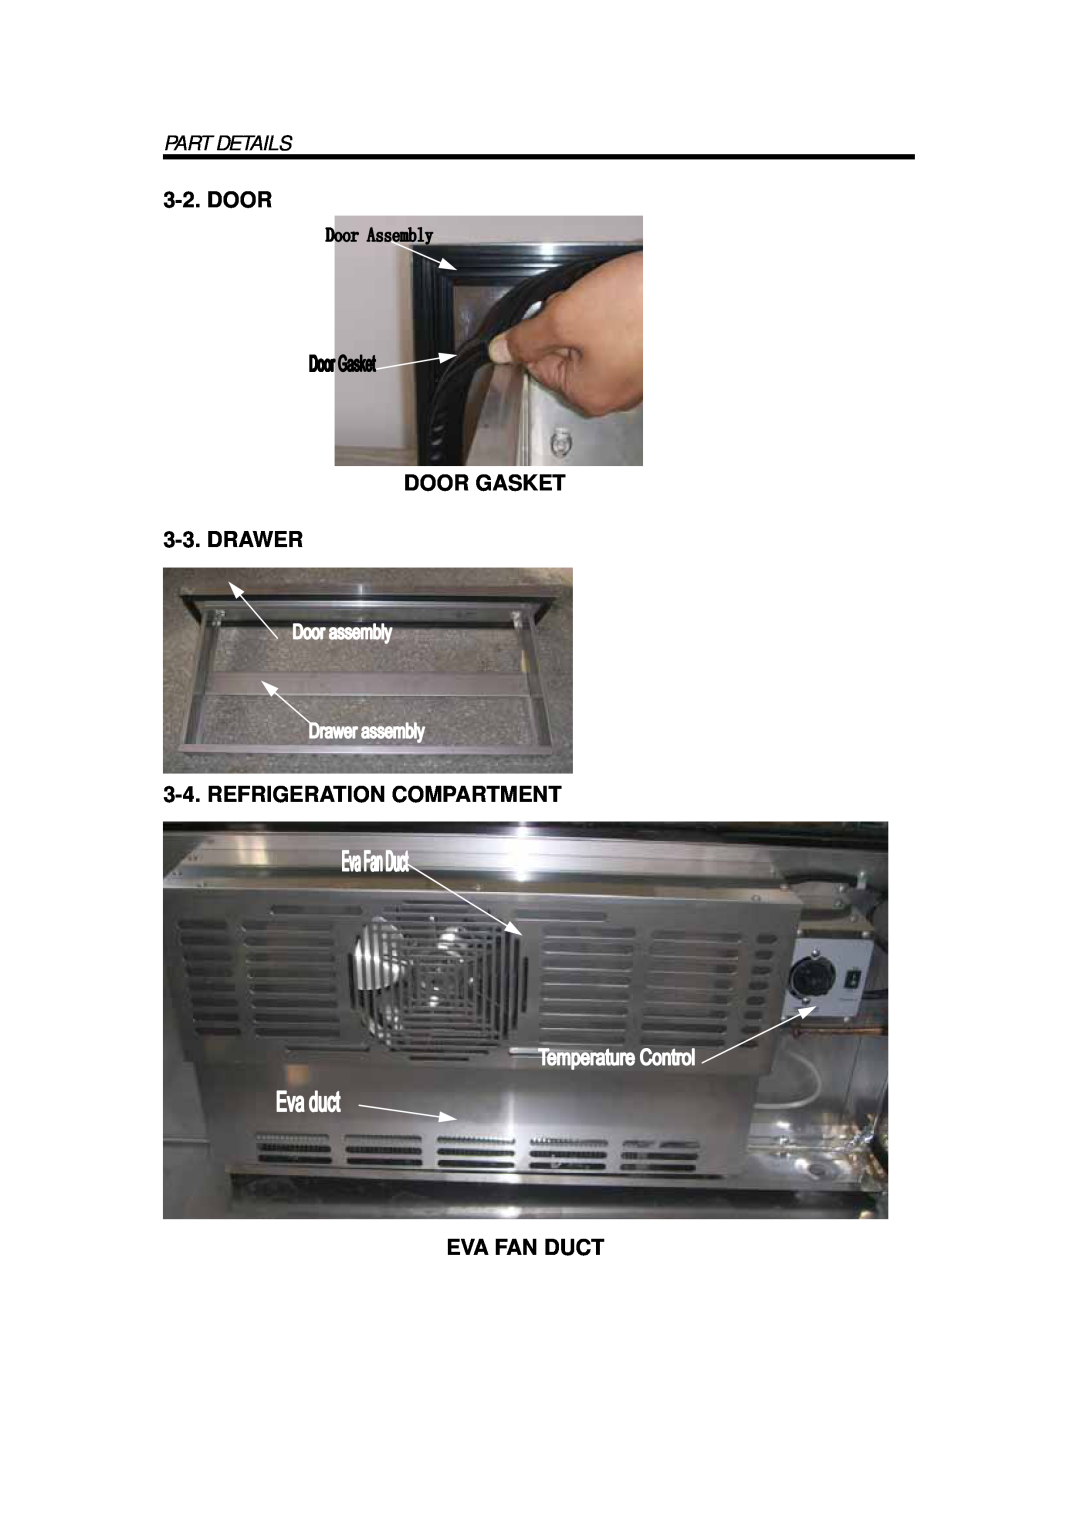 Turbo Air TCBE-82SDR, TCBE-52SDR manual DOOR DOOR GASKET 3-3.DRAWER, Refrigeration Compartment Eva Fan Duct, Part Details 